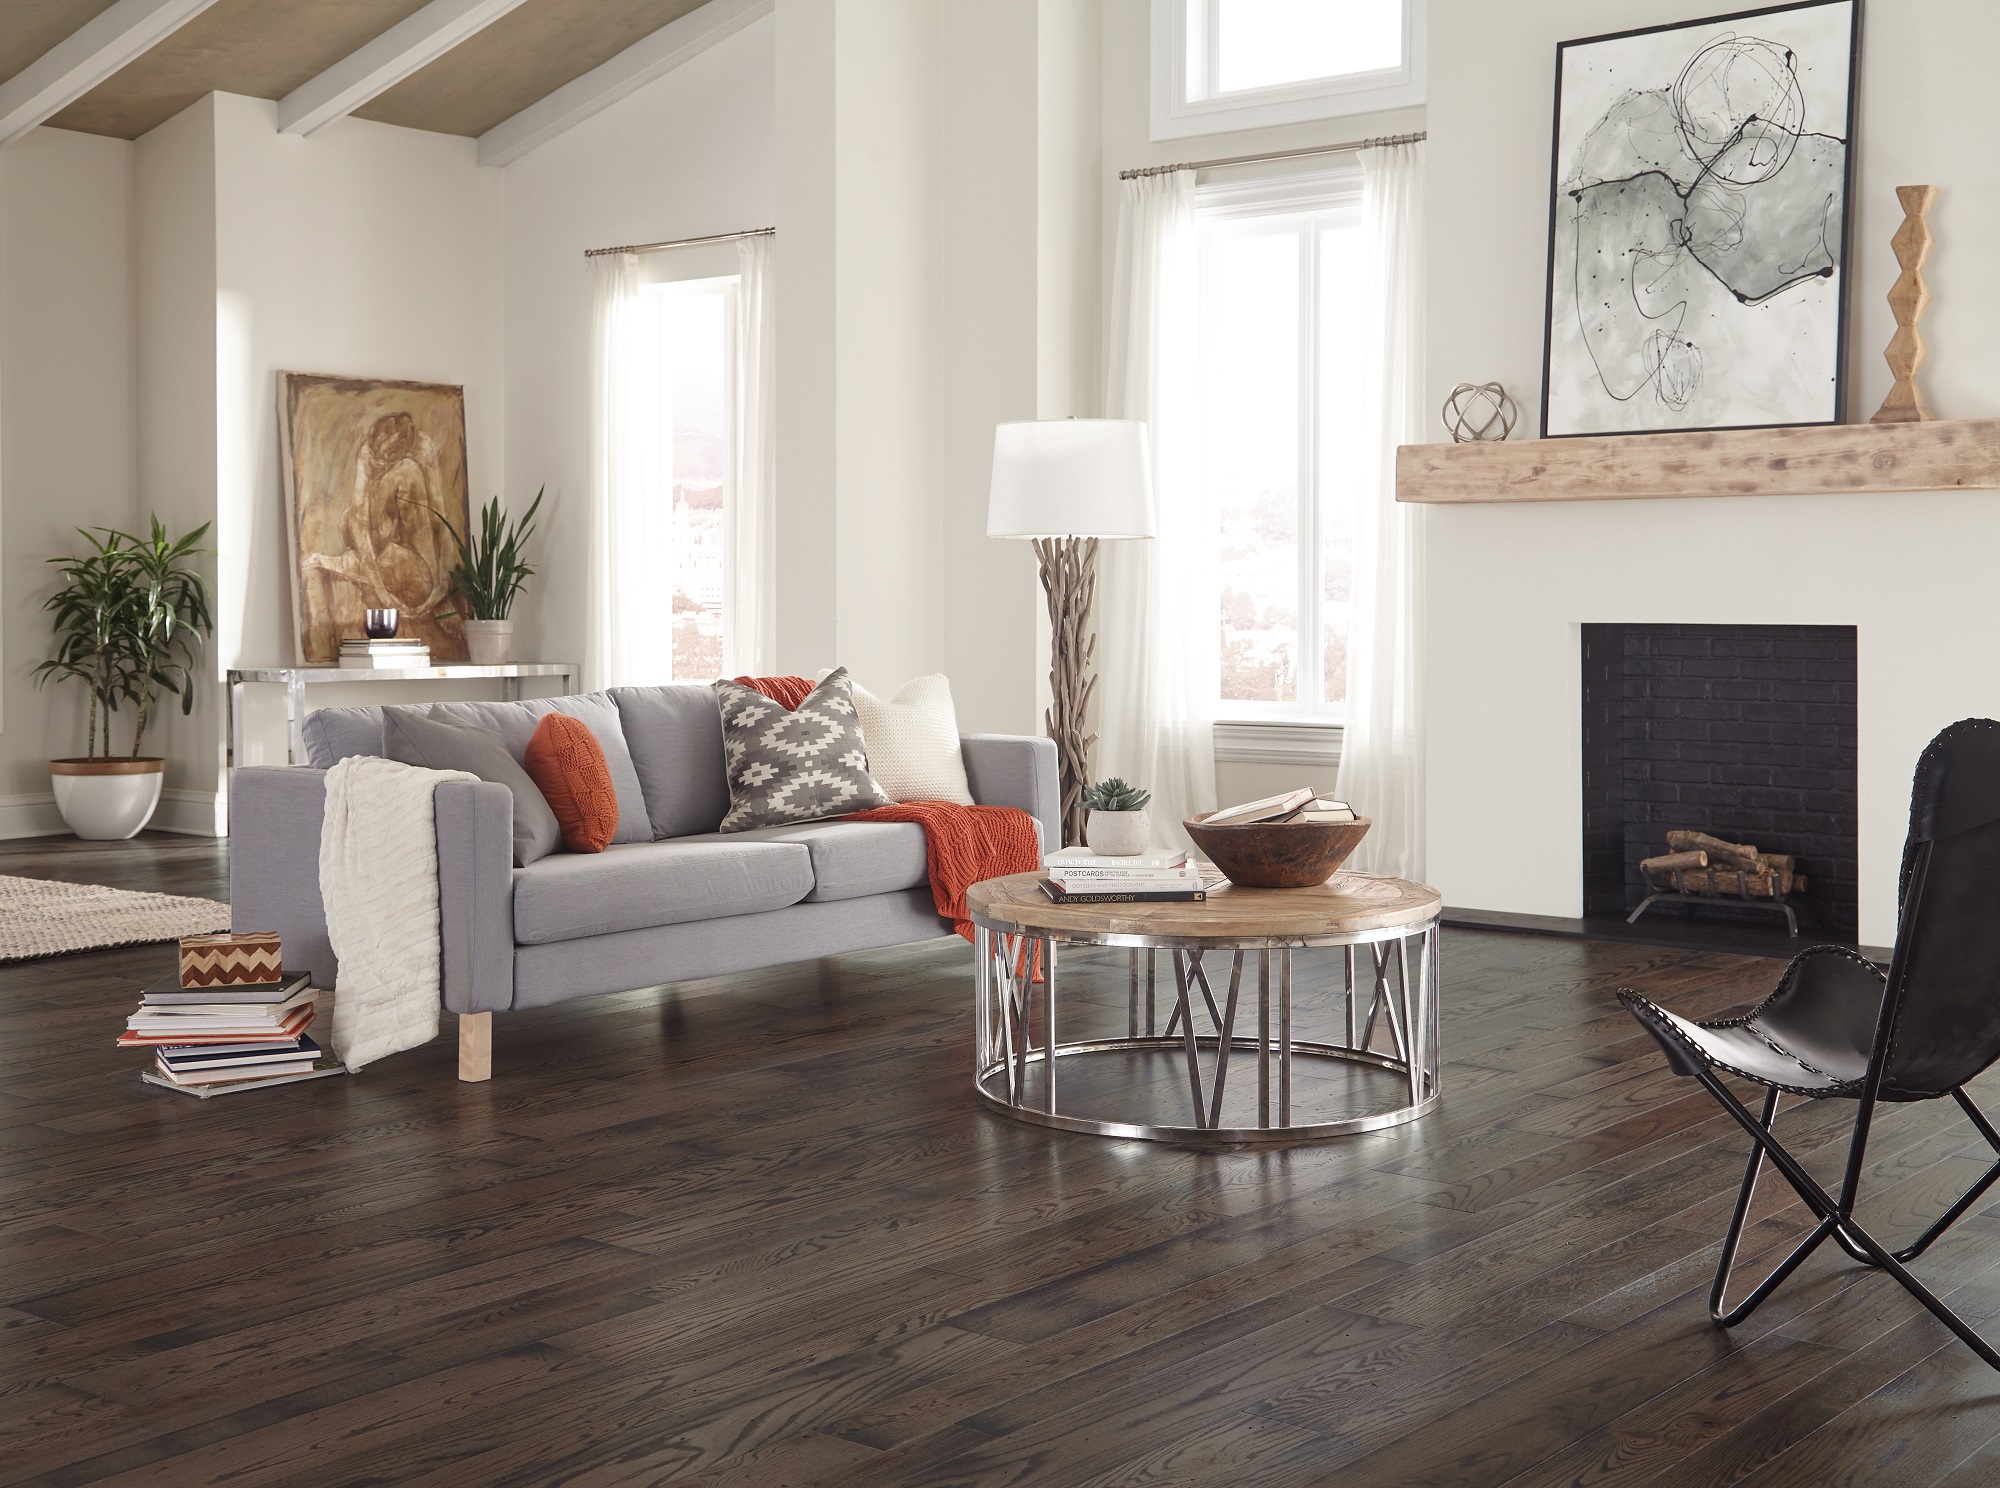 Home Somerset Hardwood Flooring, Hardwood Flooring Brands Made In Usa